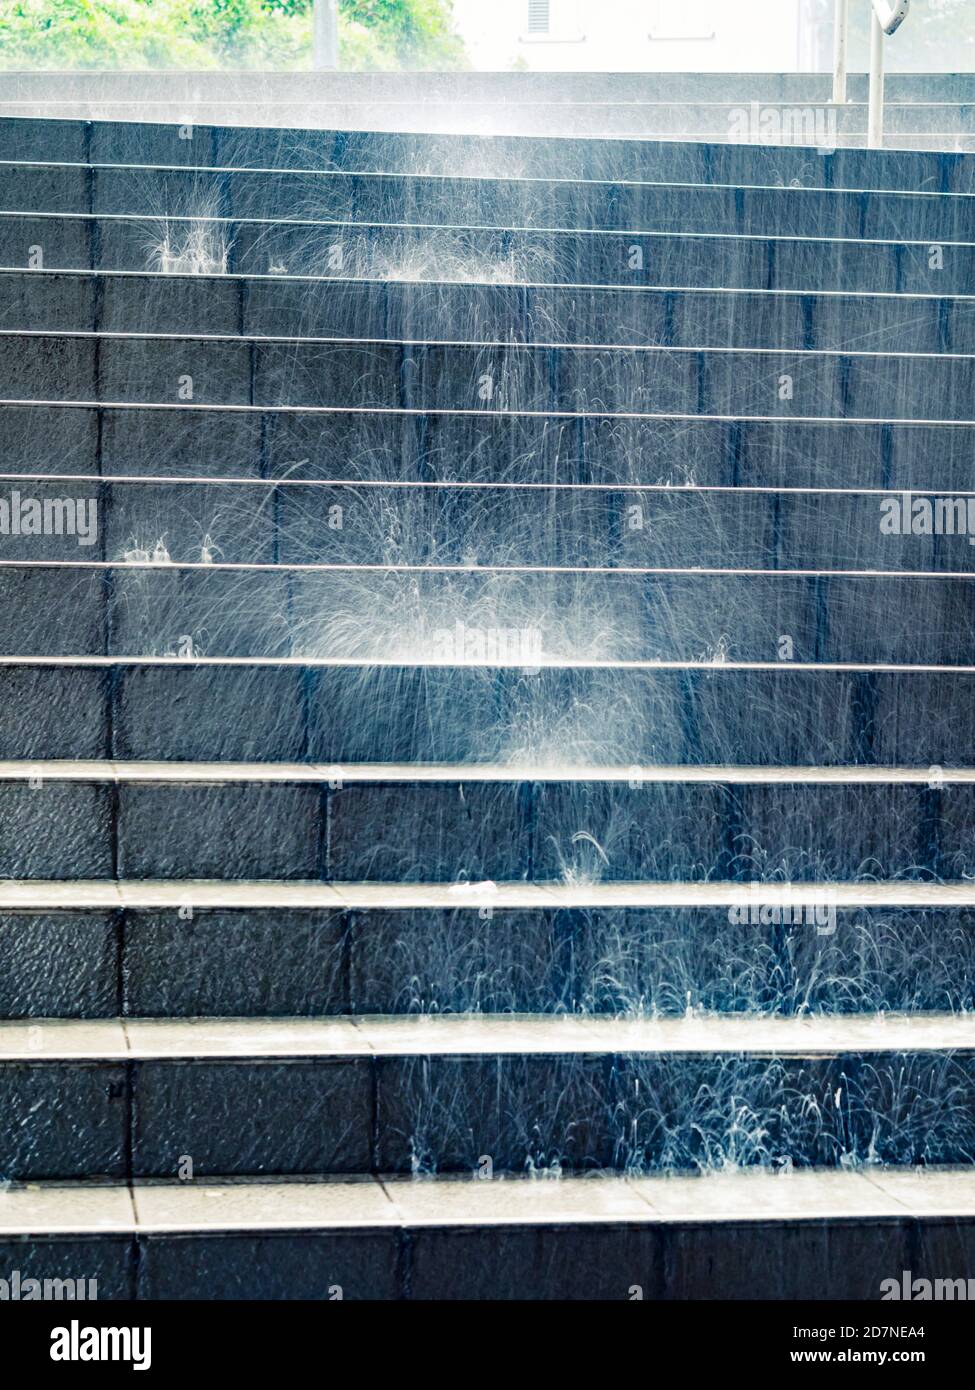 Lluvia cayendo lluvia derramada en escaleras escaleras escalera vacía Foto de stock